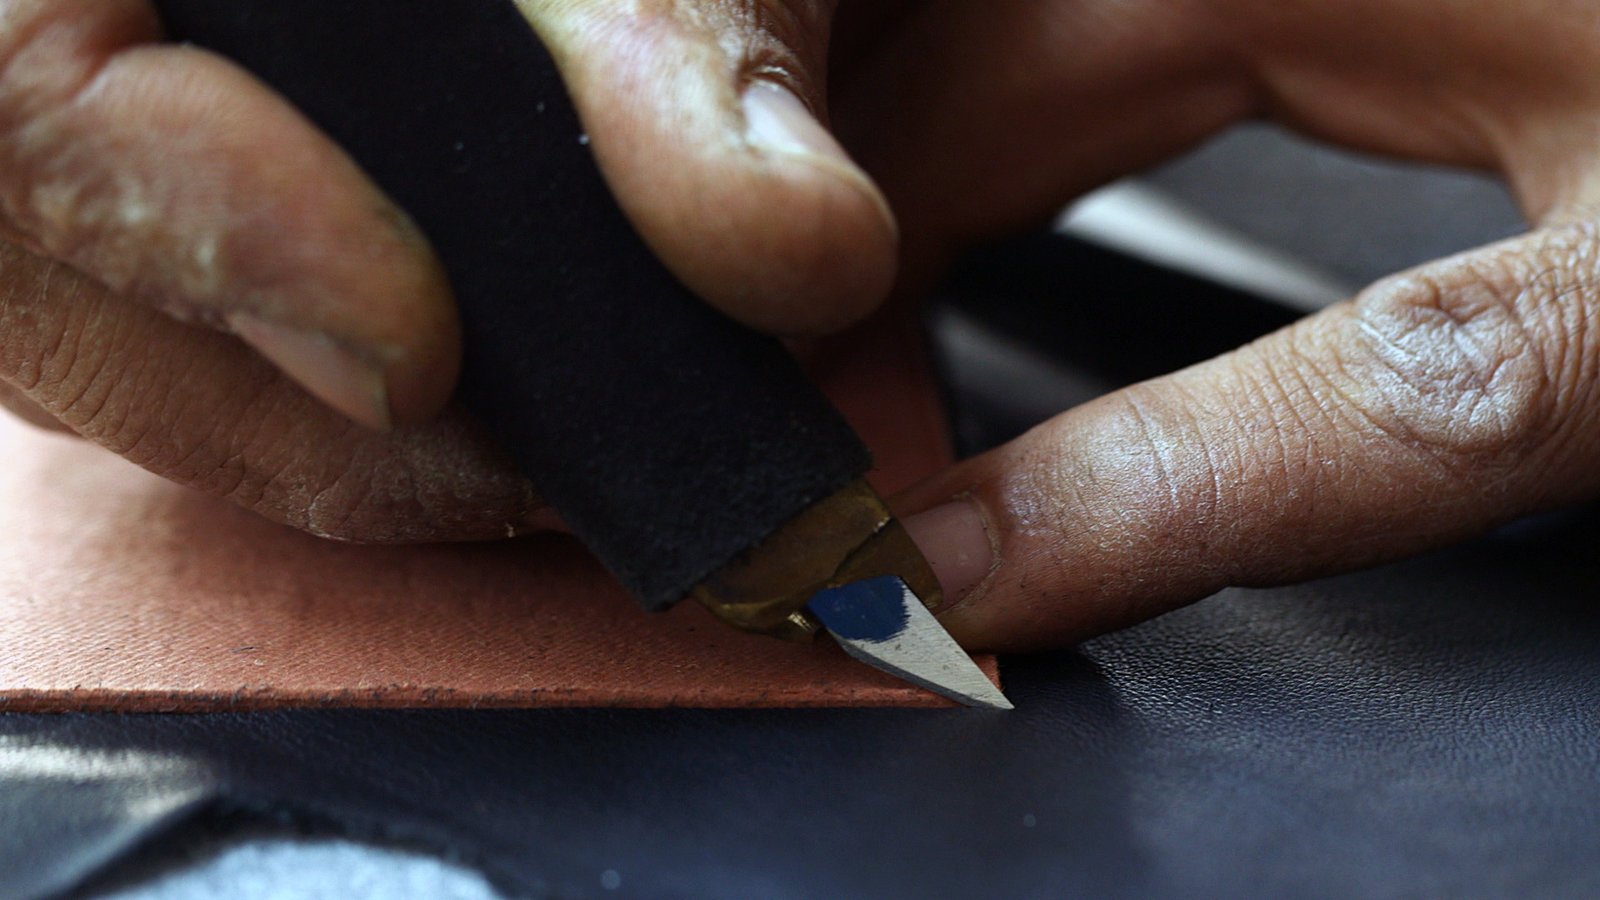 Cutting leather